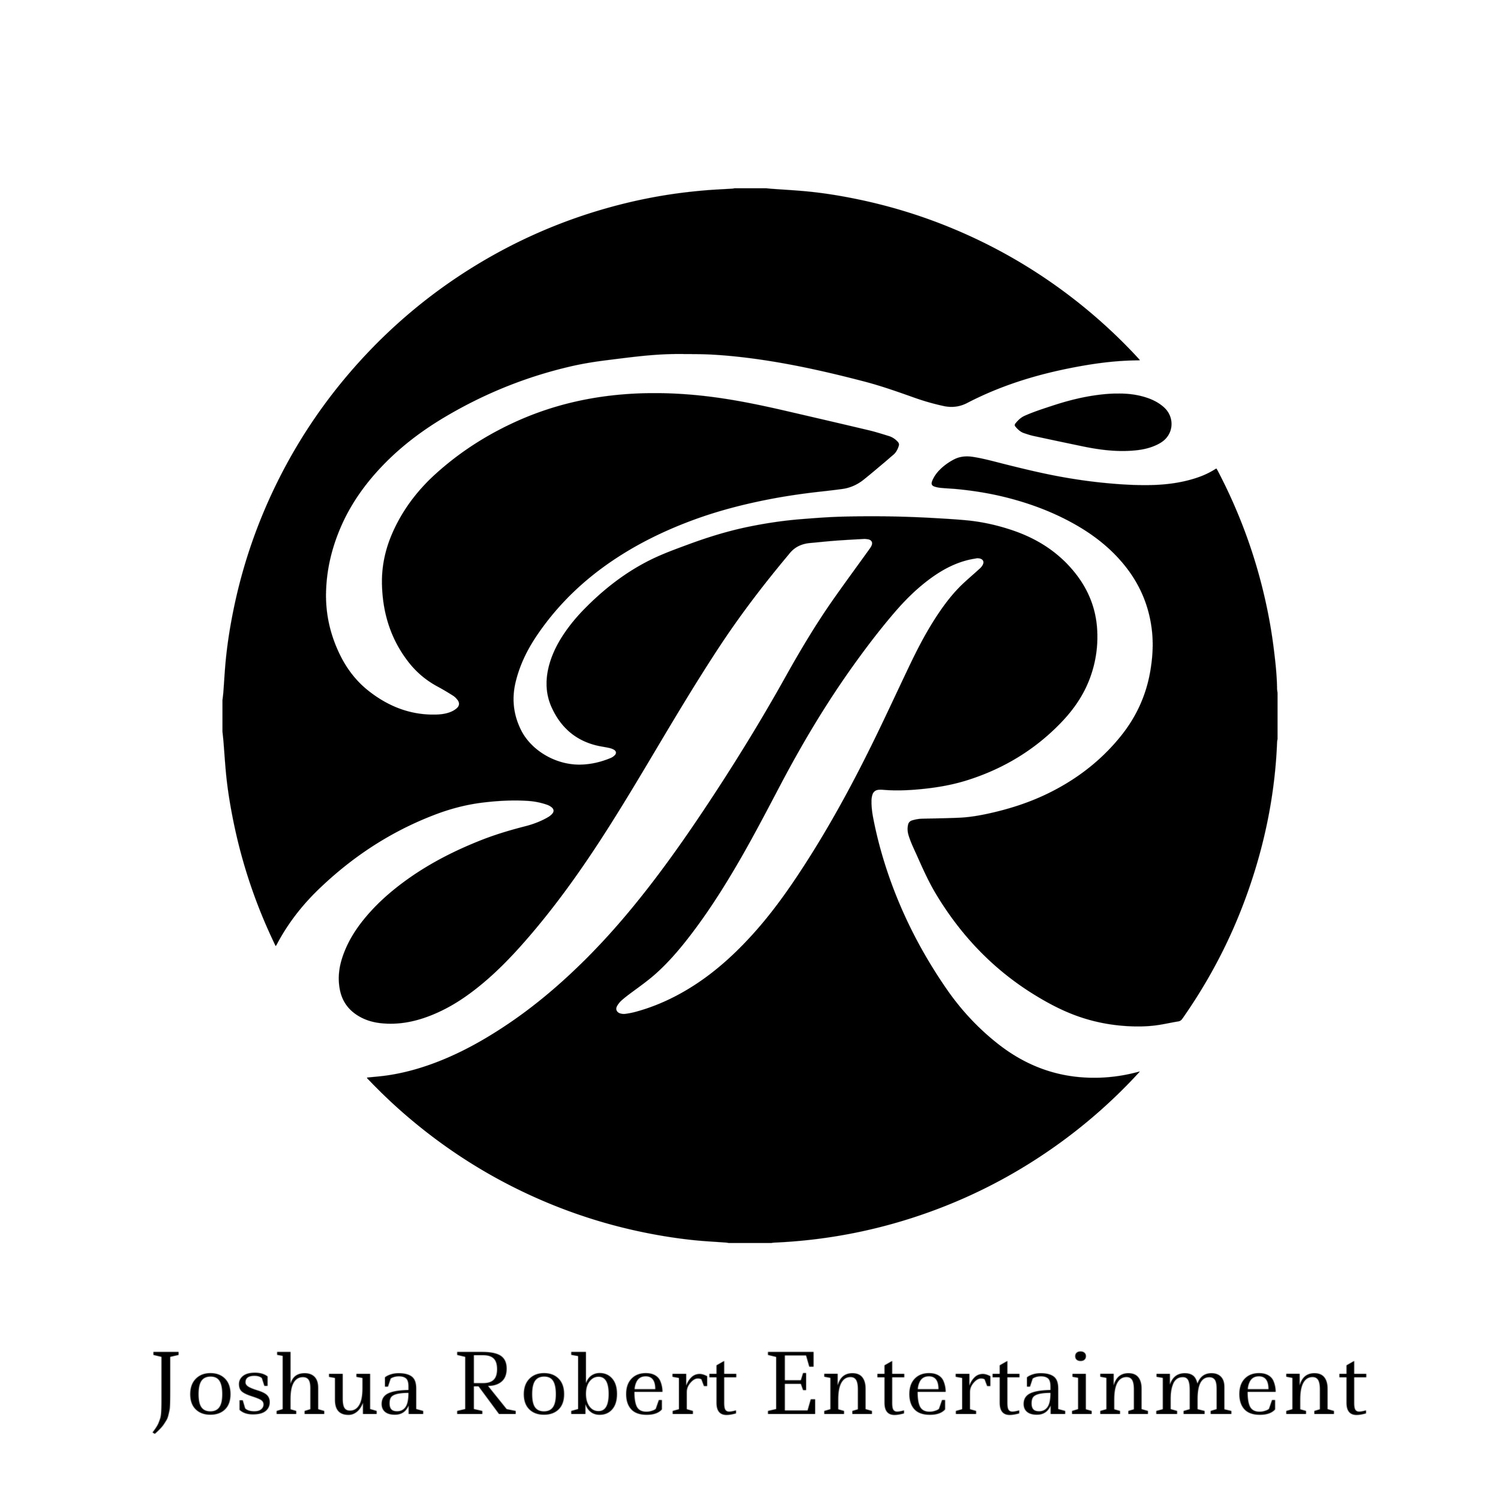 Joshua Robert Entertainment